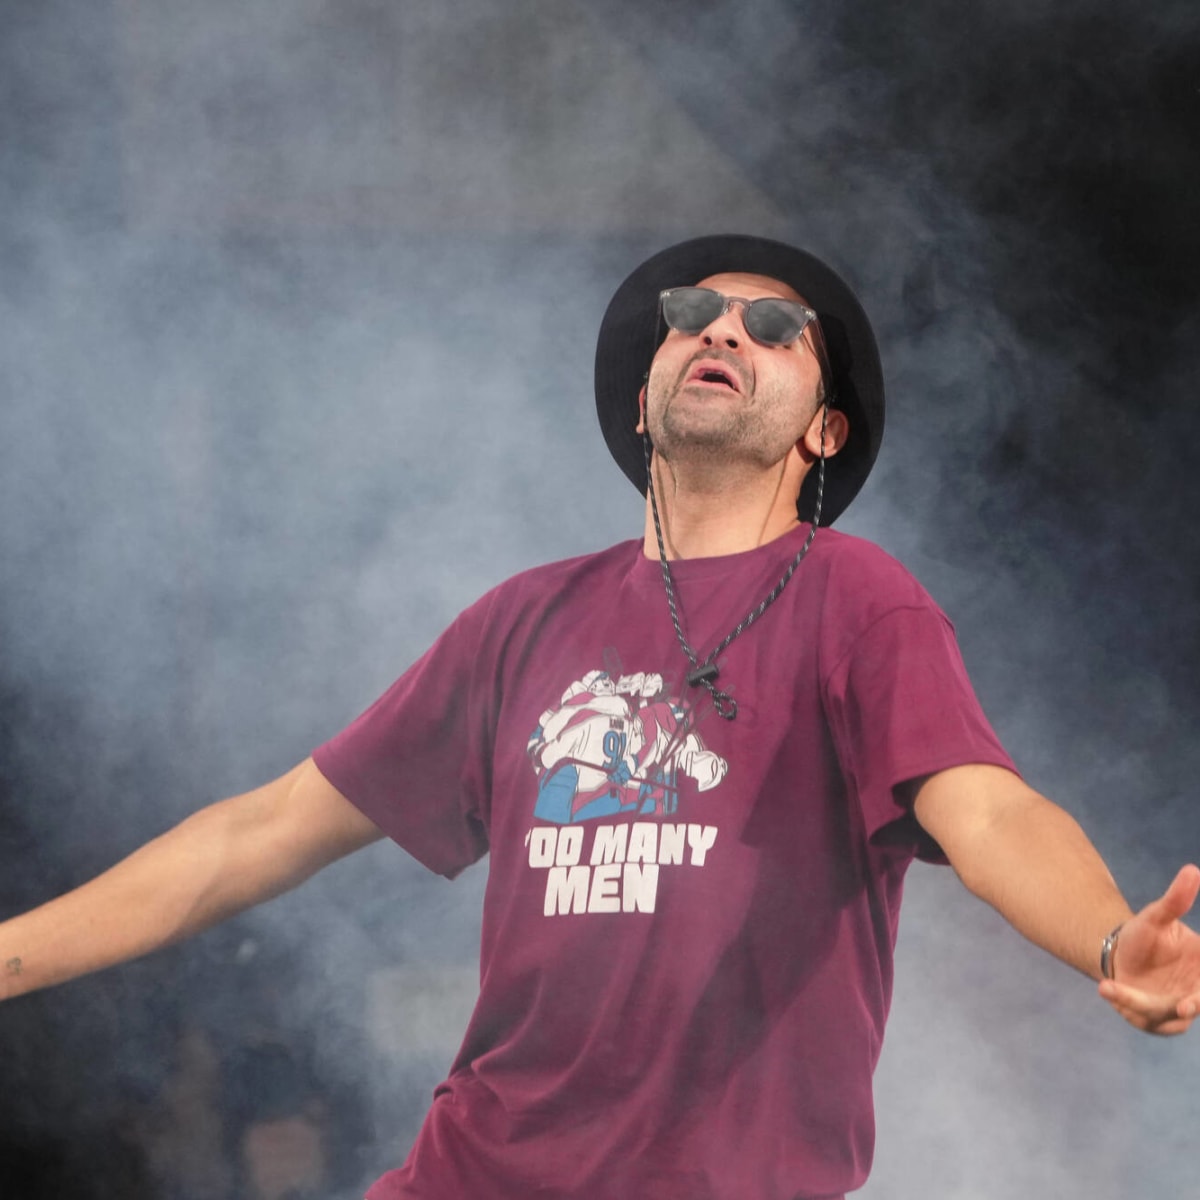 Nazem Kadri trolls Lightning with 'Too Many Men' shirt at Avalanche's Cup  parade